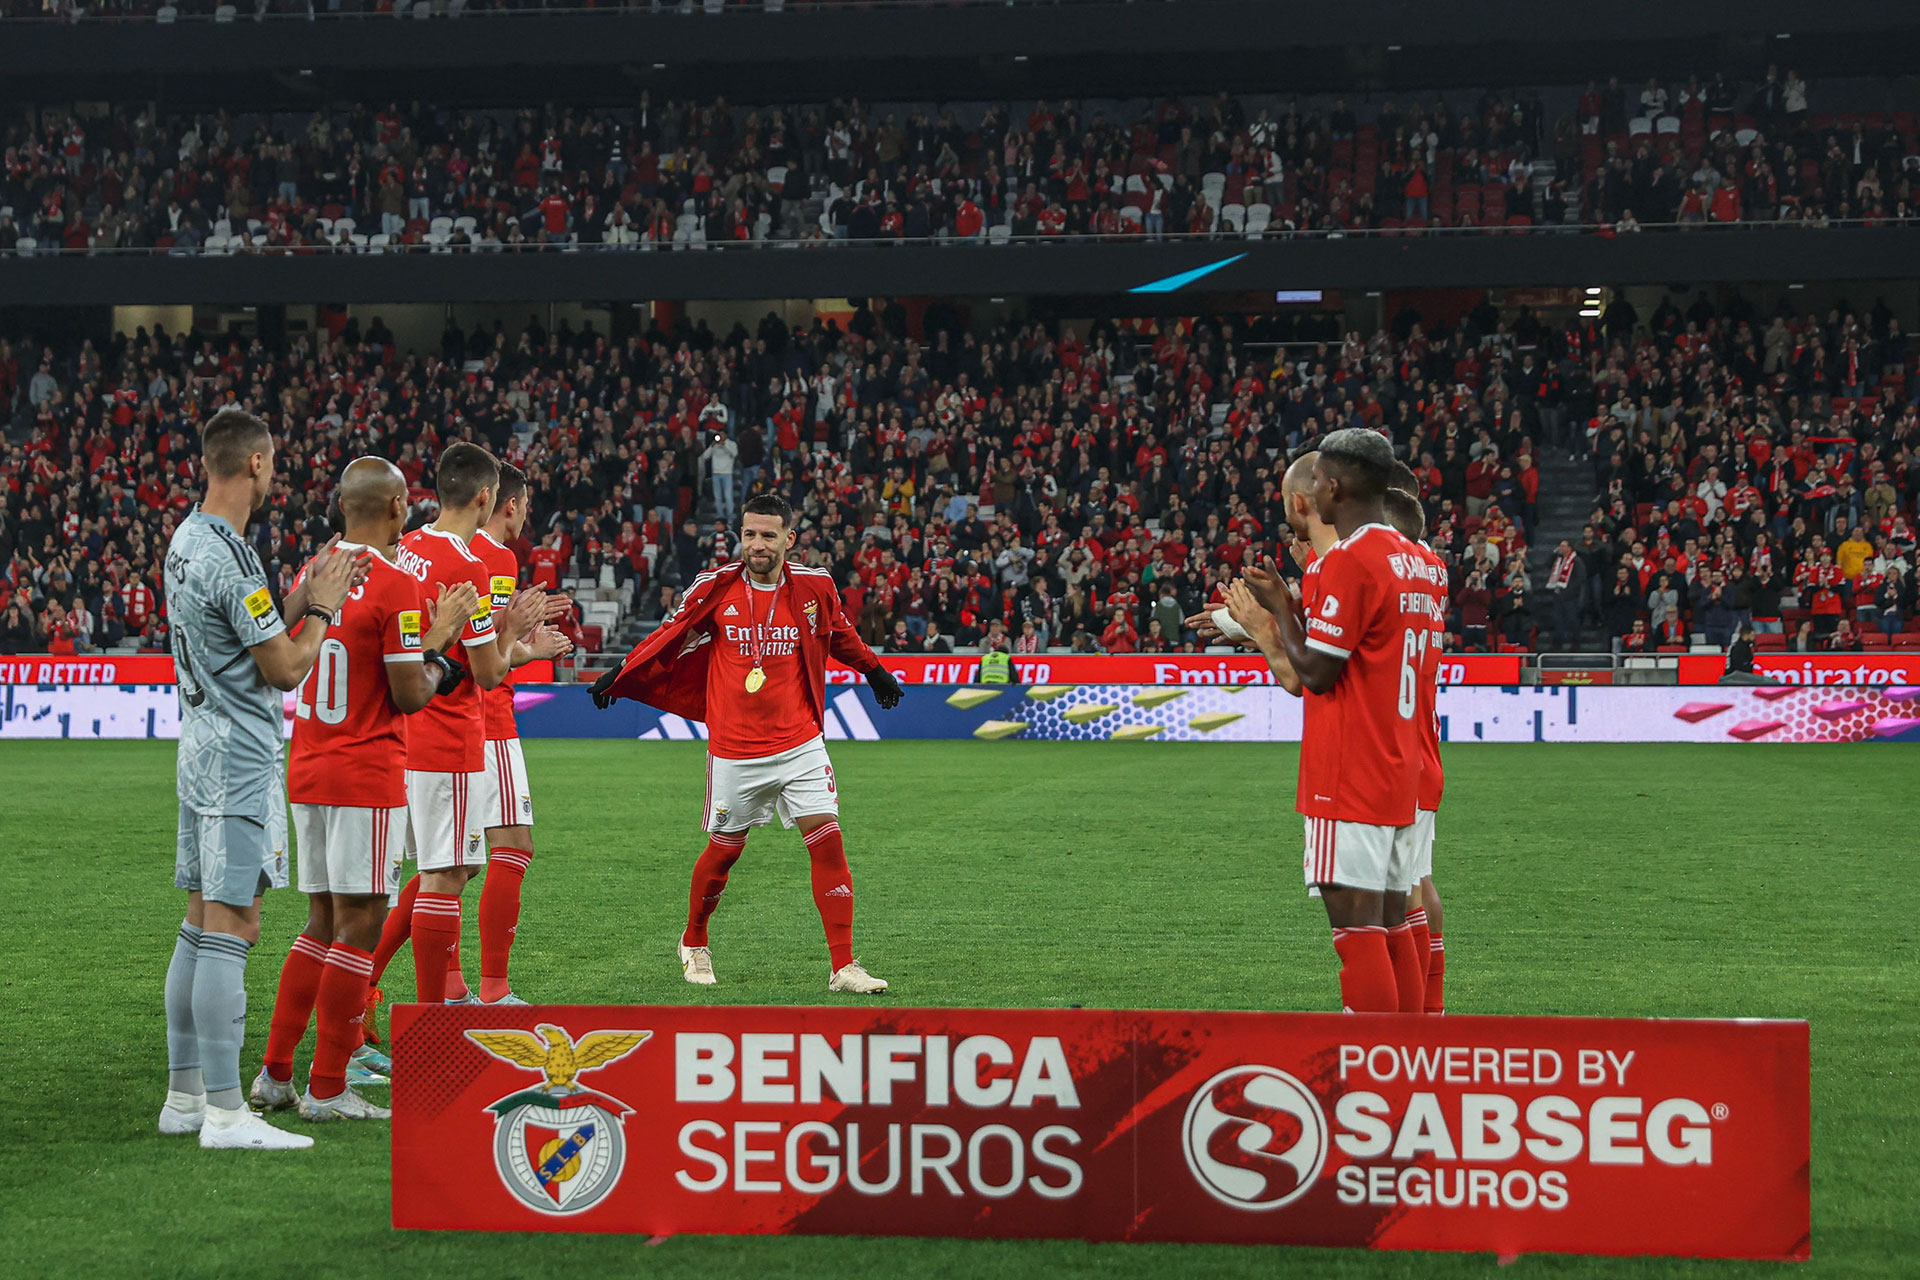 El Benfica le hizo un homenaje a Otamendi tras ser campeón con Argentina (Crédito: Twitter @SLBenfica)